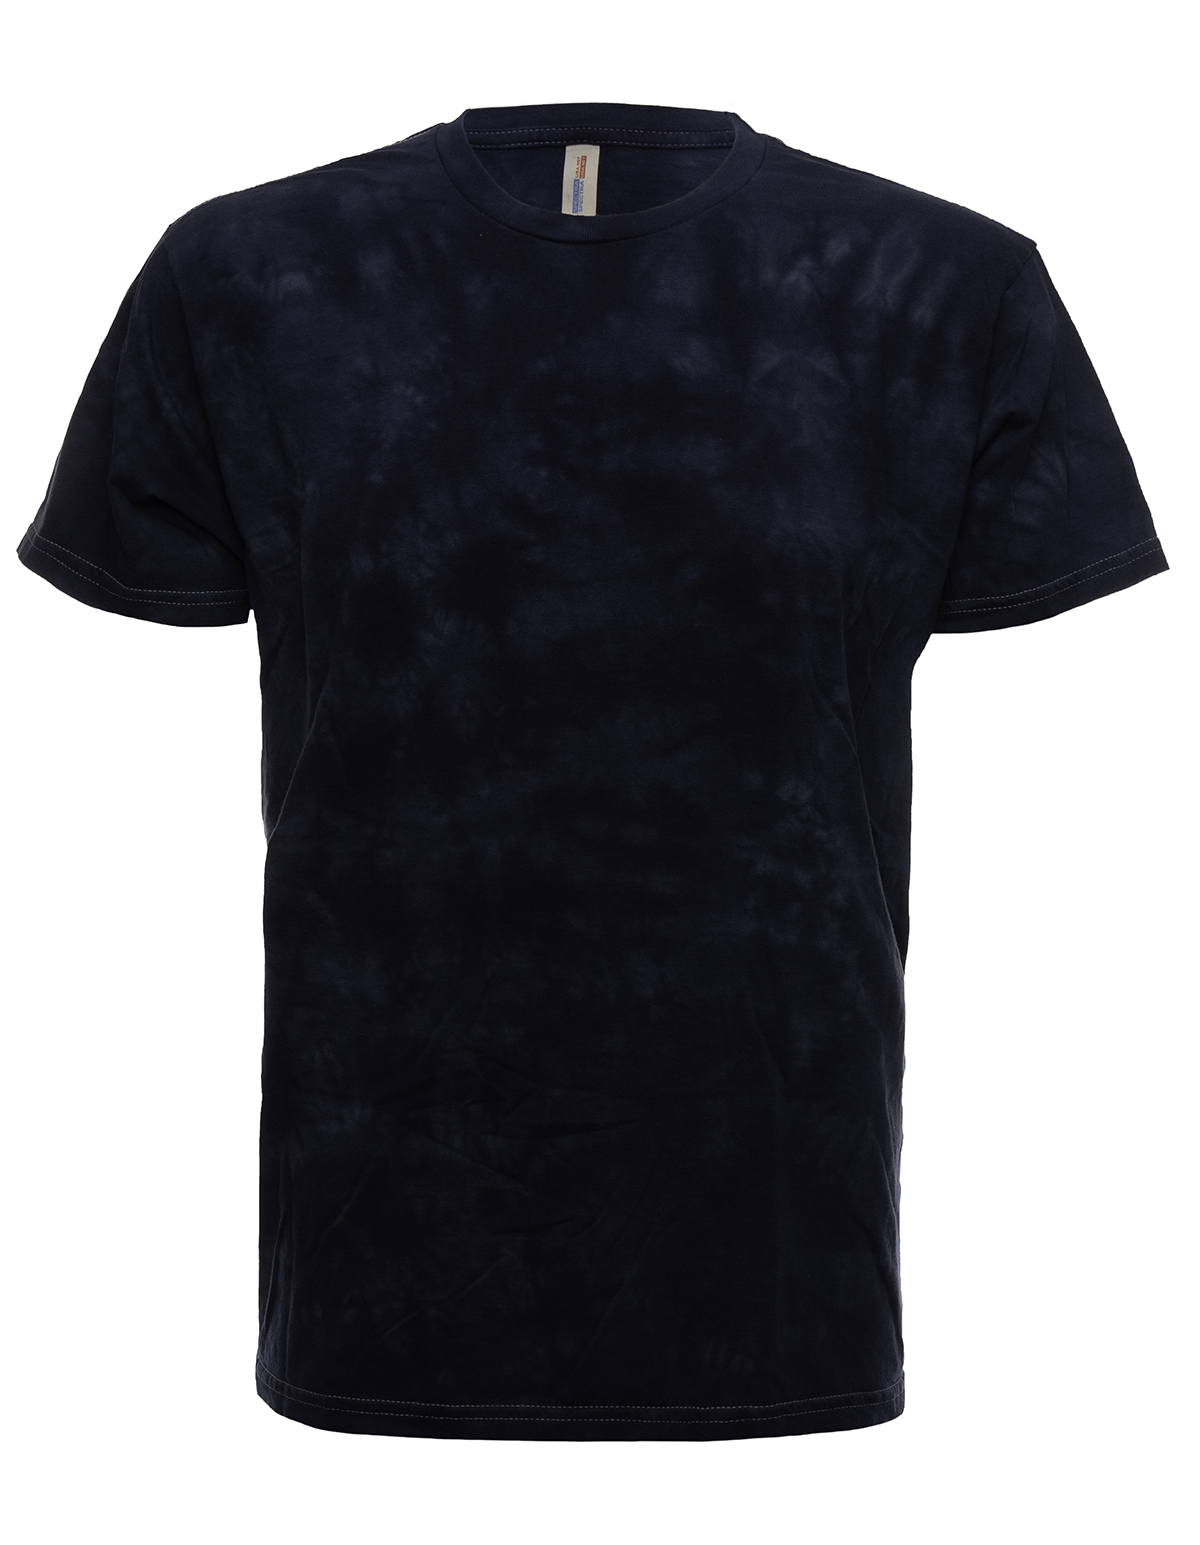 31 Cloud-Cloudwash Ocean Front T-shirt